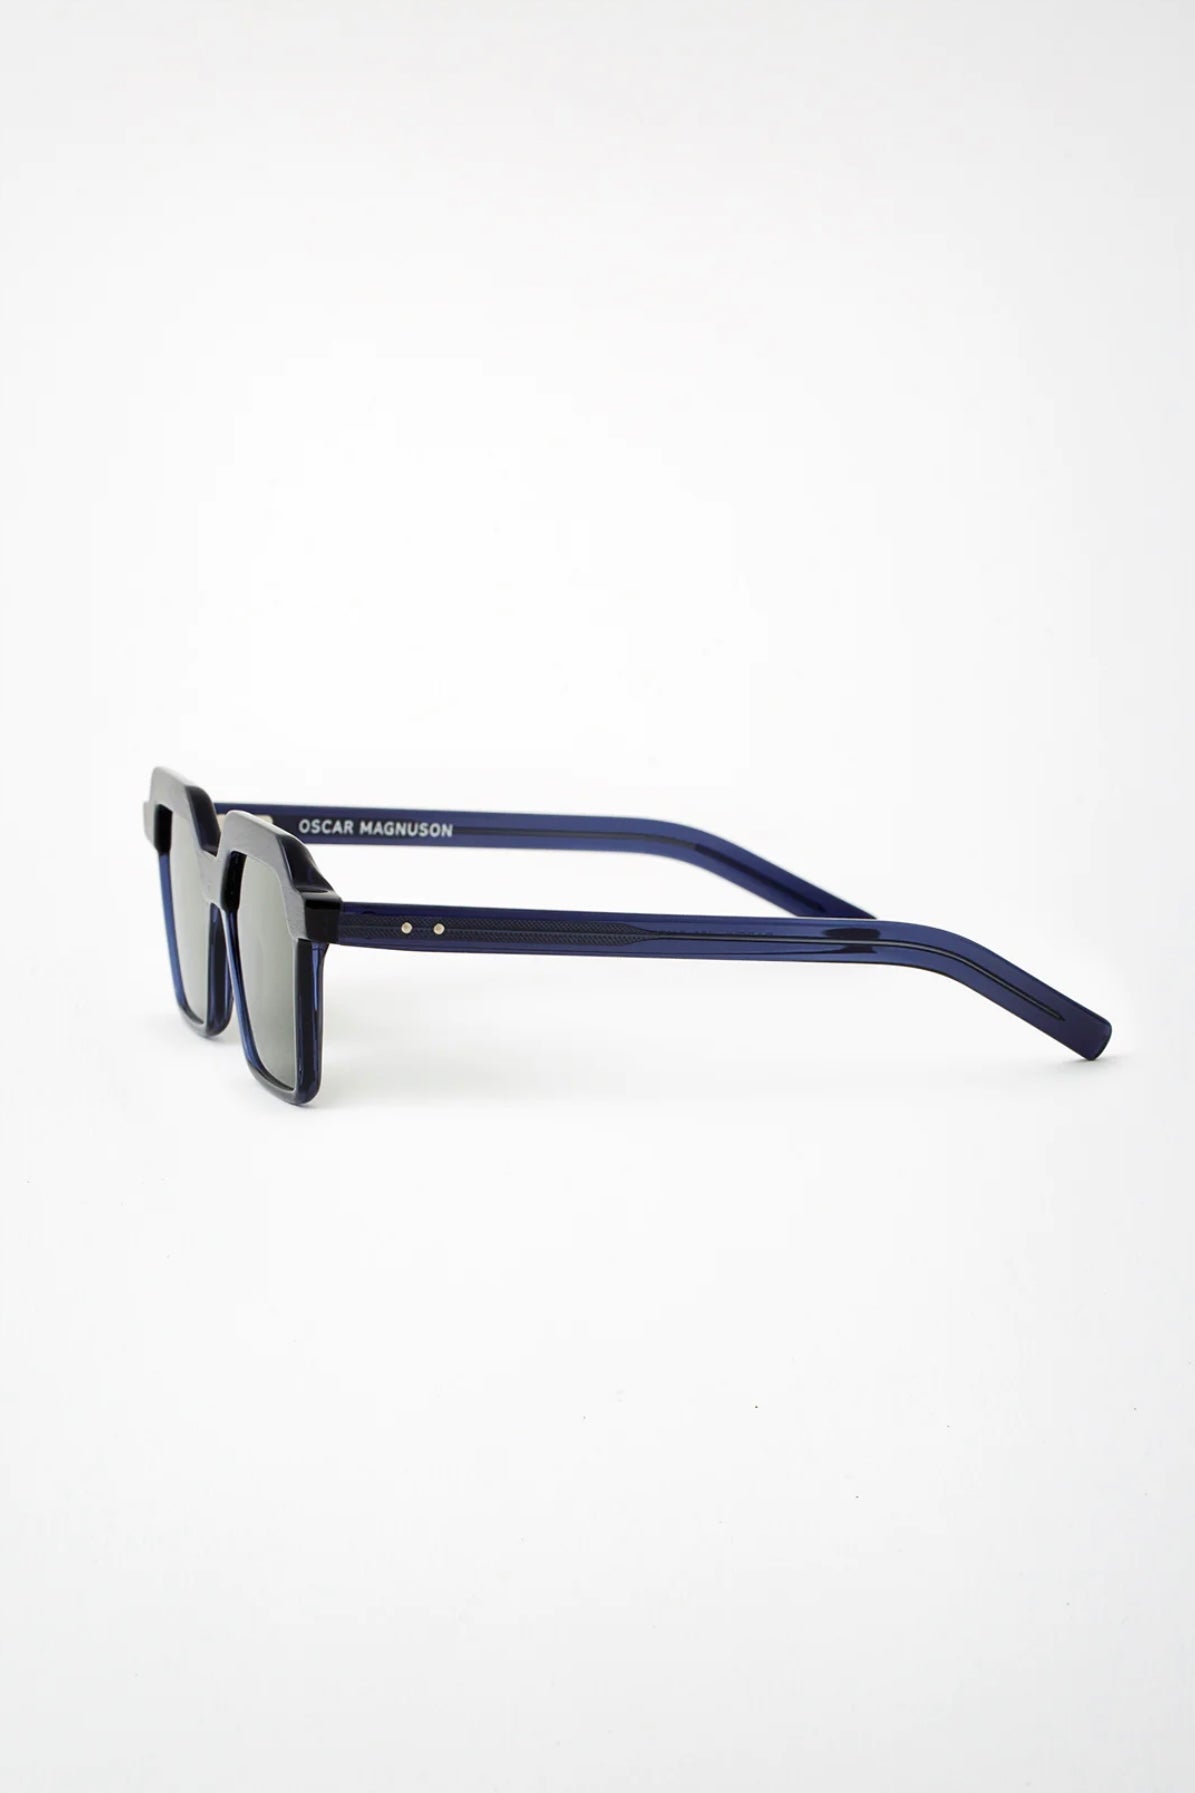 Oscar Magnuson - Sunglasses Darryl Midnight Blue